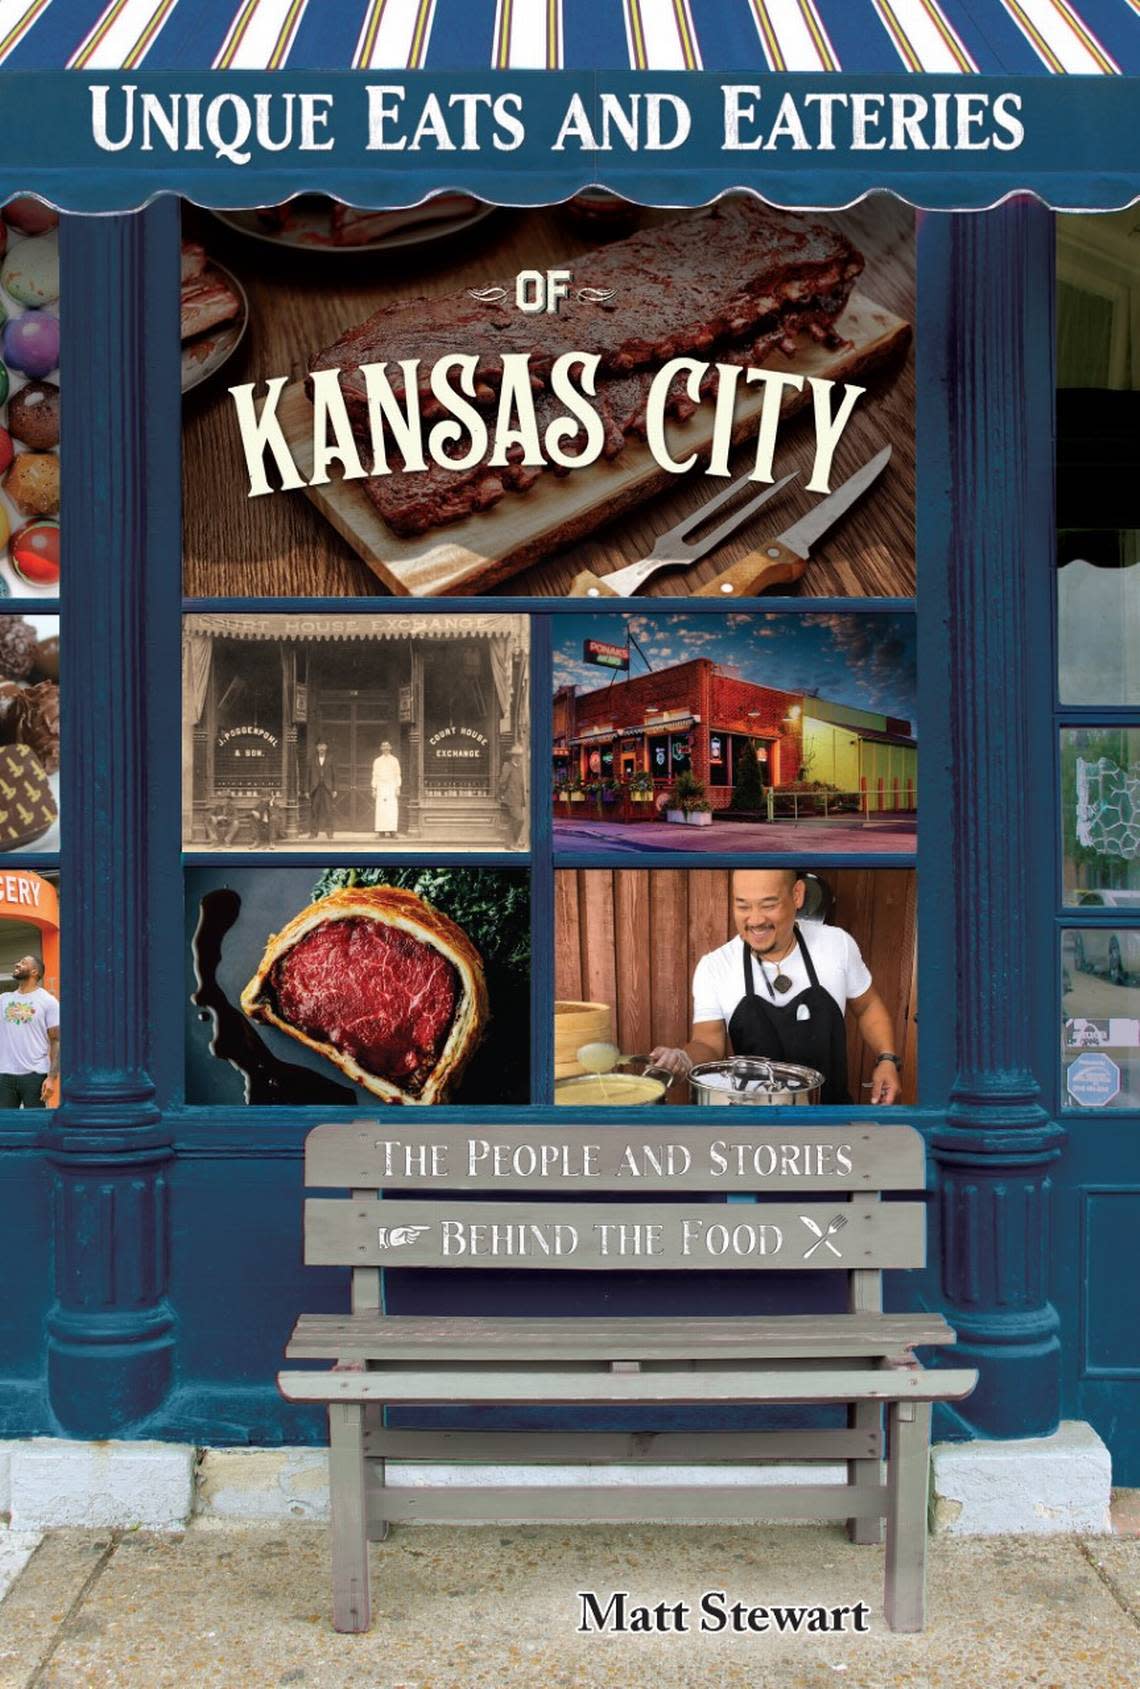 “Unique Eats and Eateries of Kansas City”